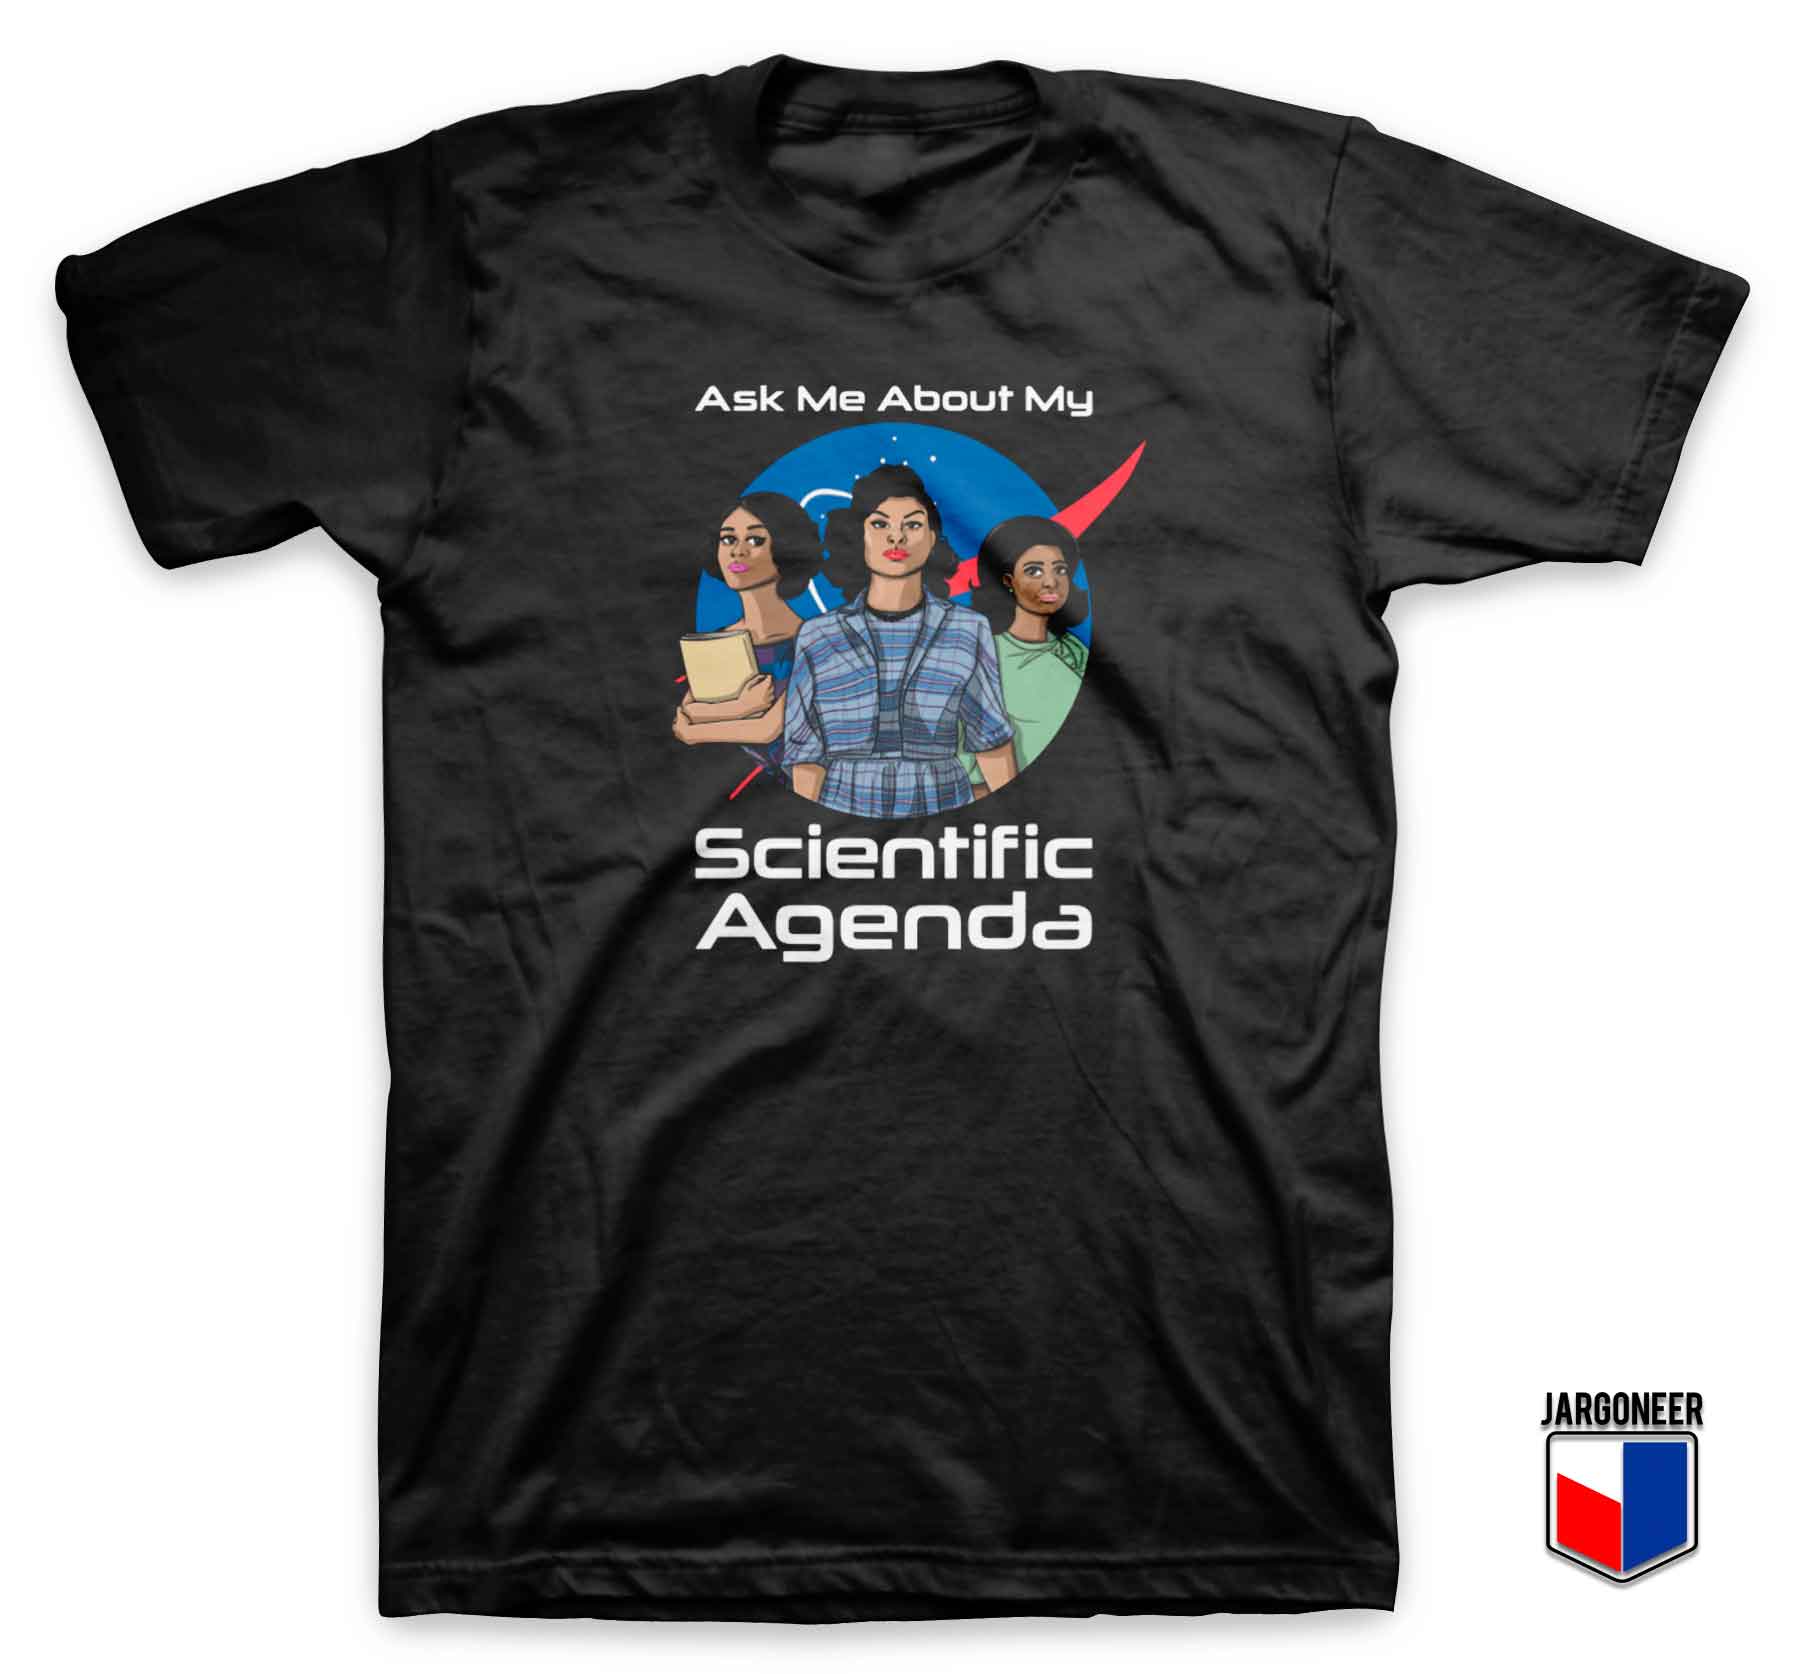 Scientific Agenda - Shop Unique Graphic Cool Shirt Designs